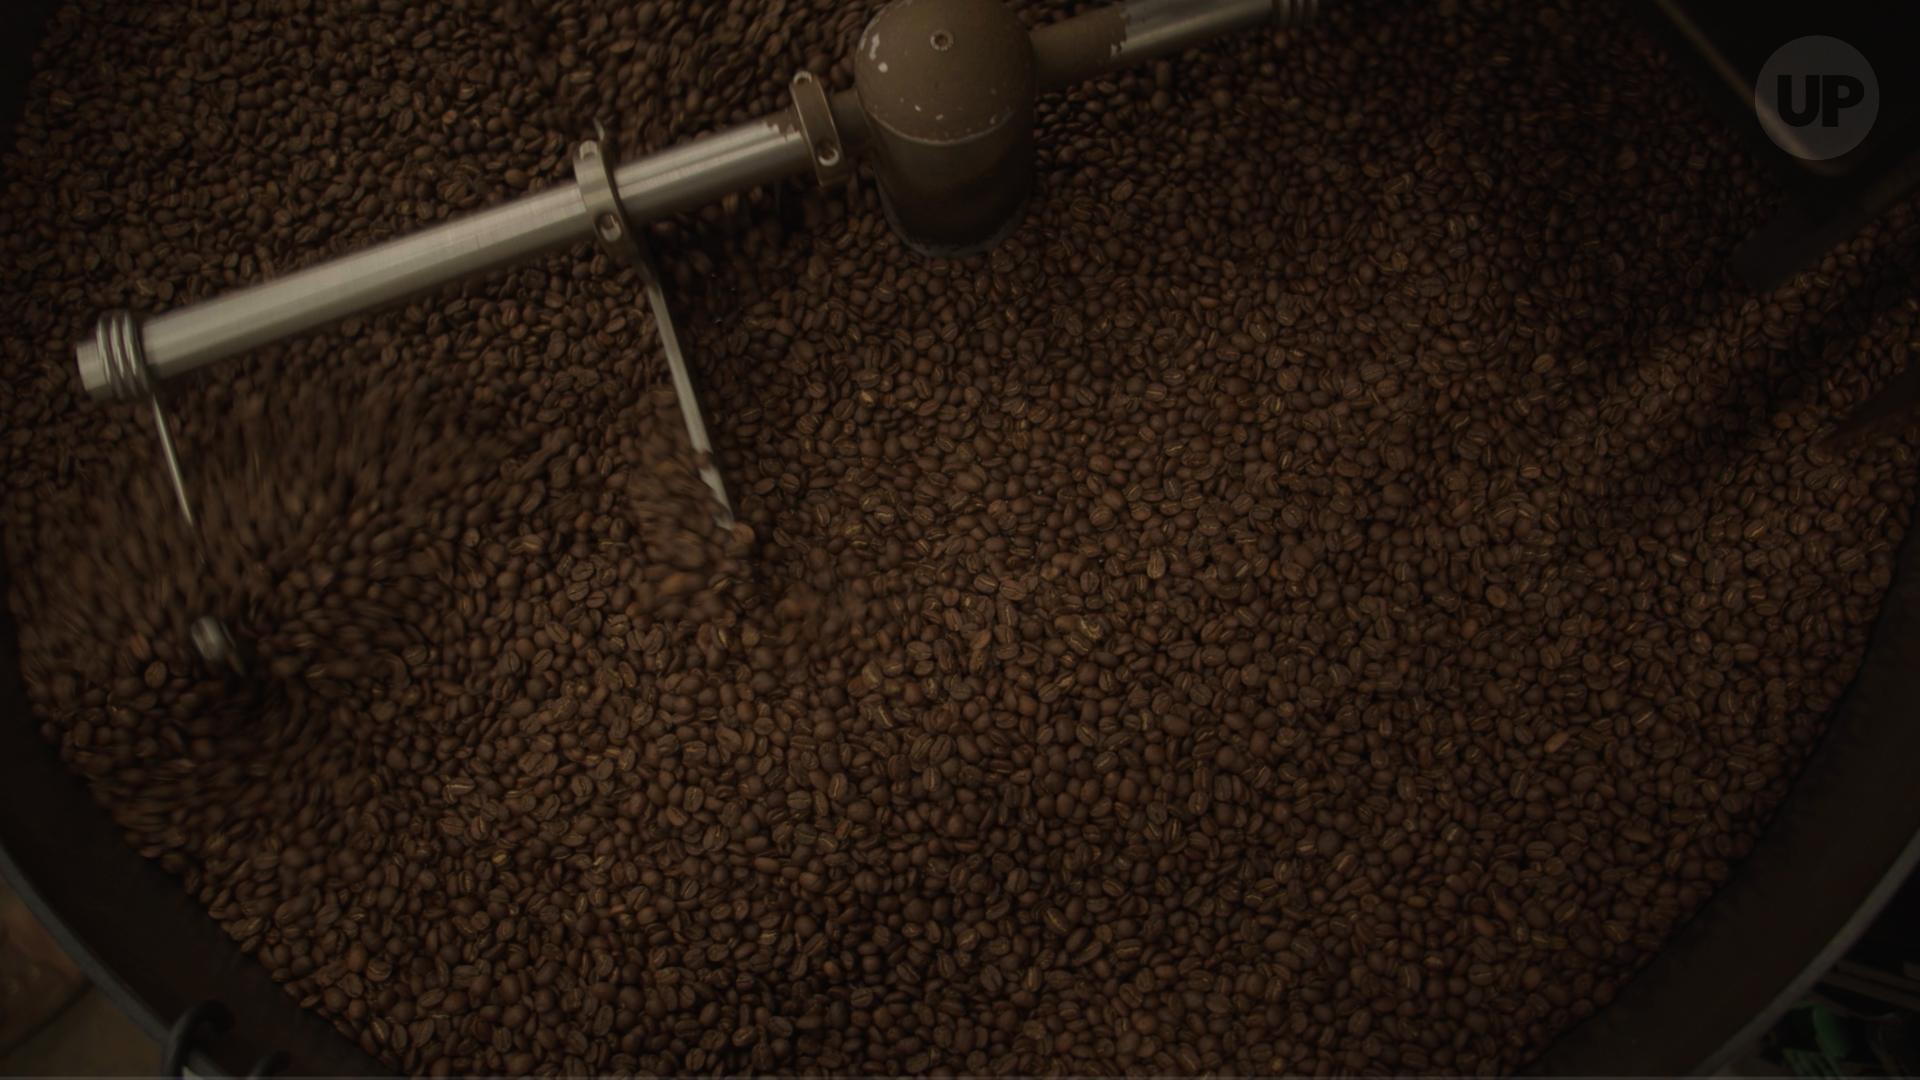 Midwest Coffee Roasters